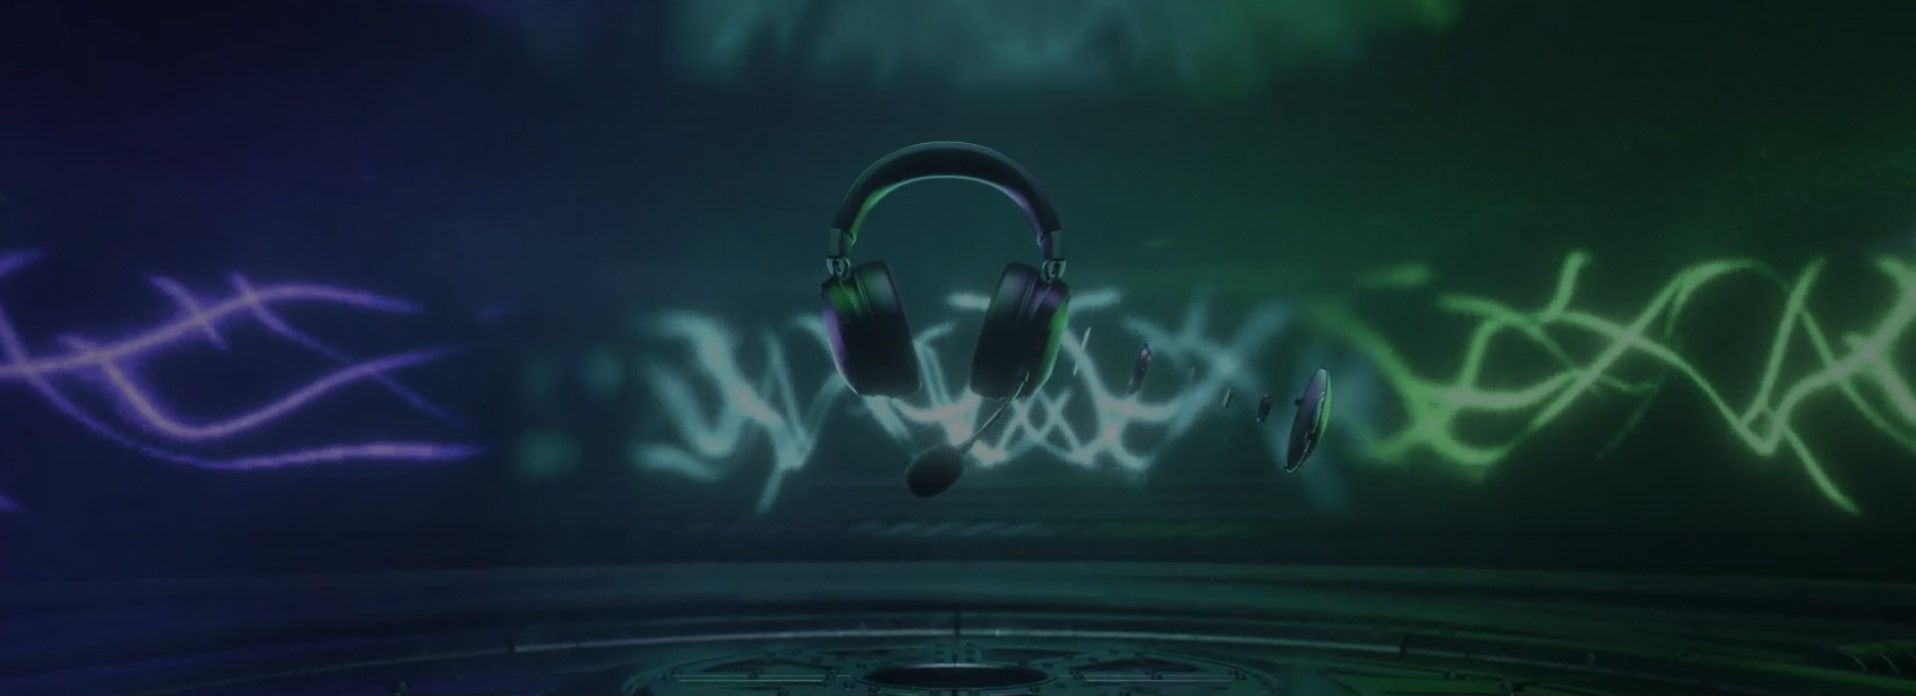 Razer Kraken V3 Pro,Headset,หูฟังไร้สาย,หูฟังเสียงดี,headphones,หูฟังบลูทูธ,หูฟังครอบหู,หูฟังเกมมิ่ง